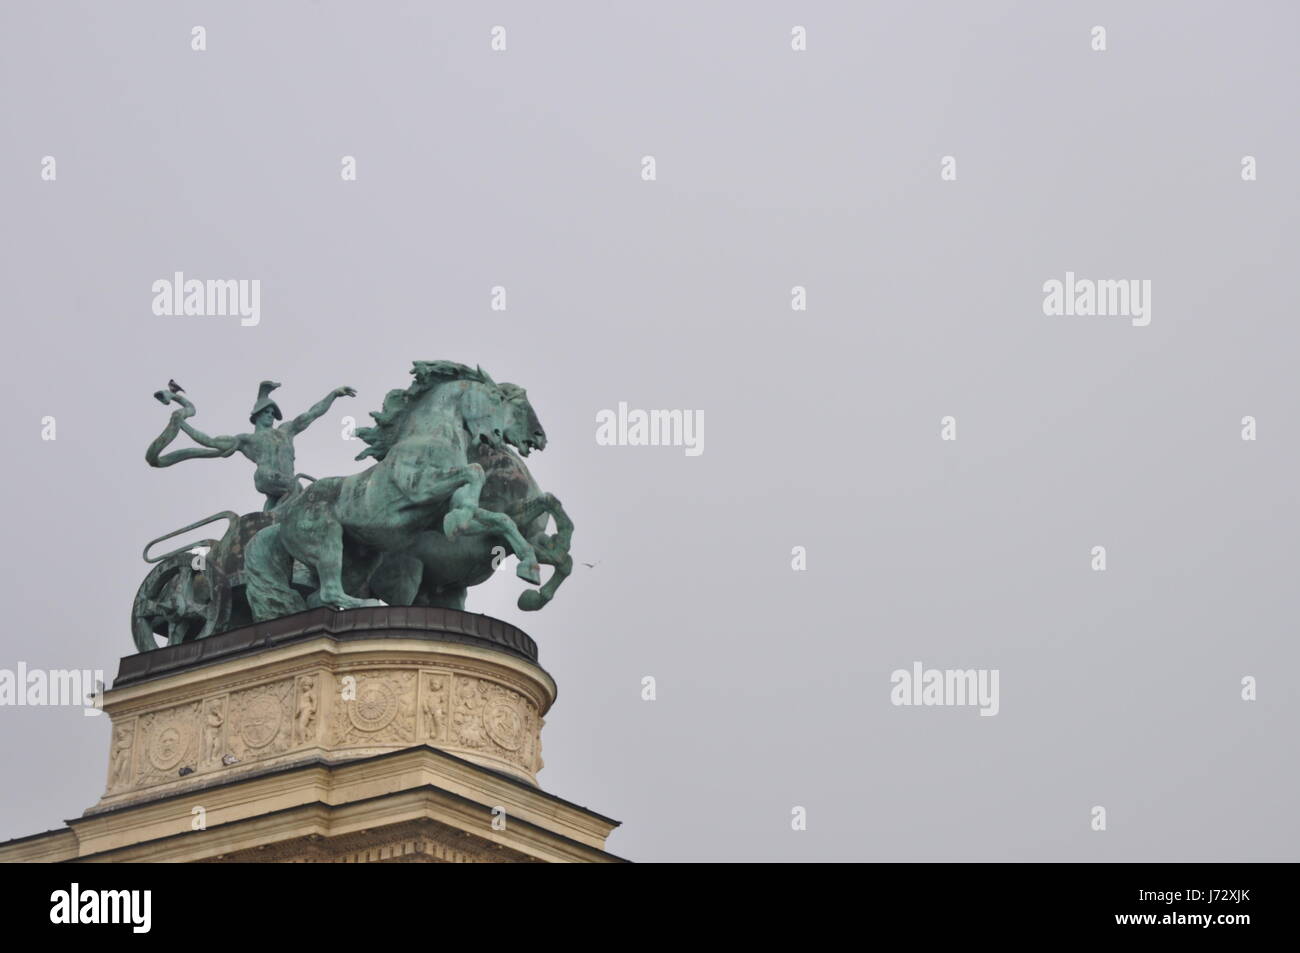 Budapest monument Stock Photo